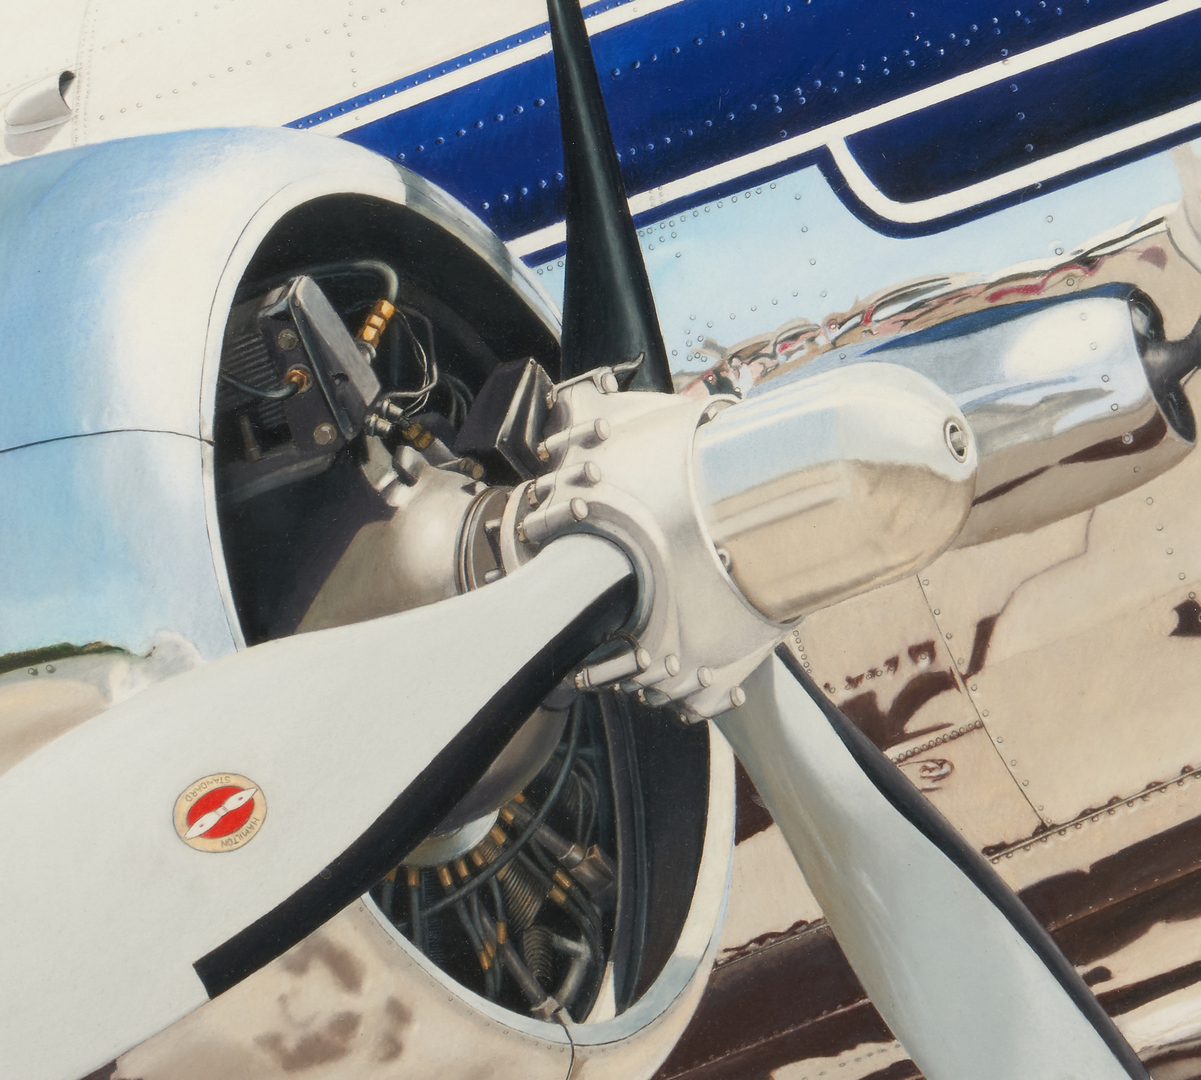 Lot 651: Scott Paulk Acrylic Painting, Piedmont Airlines